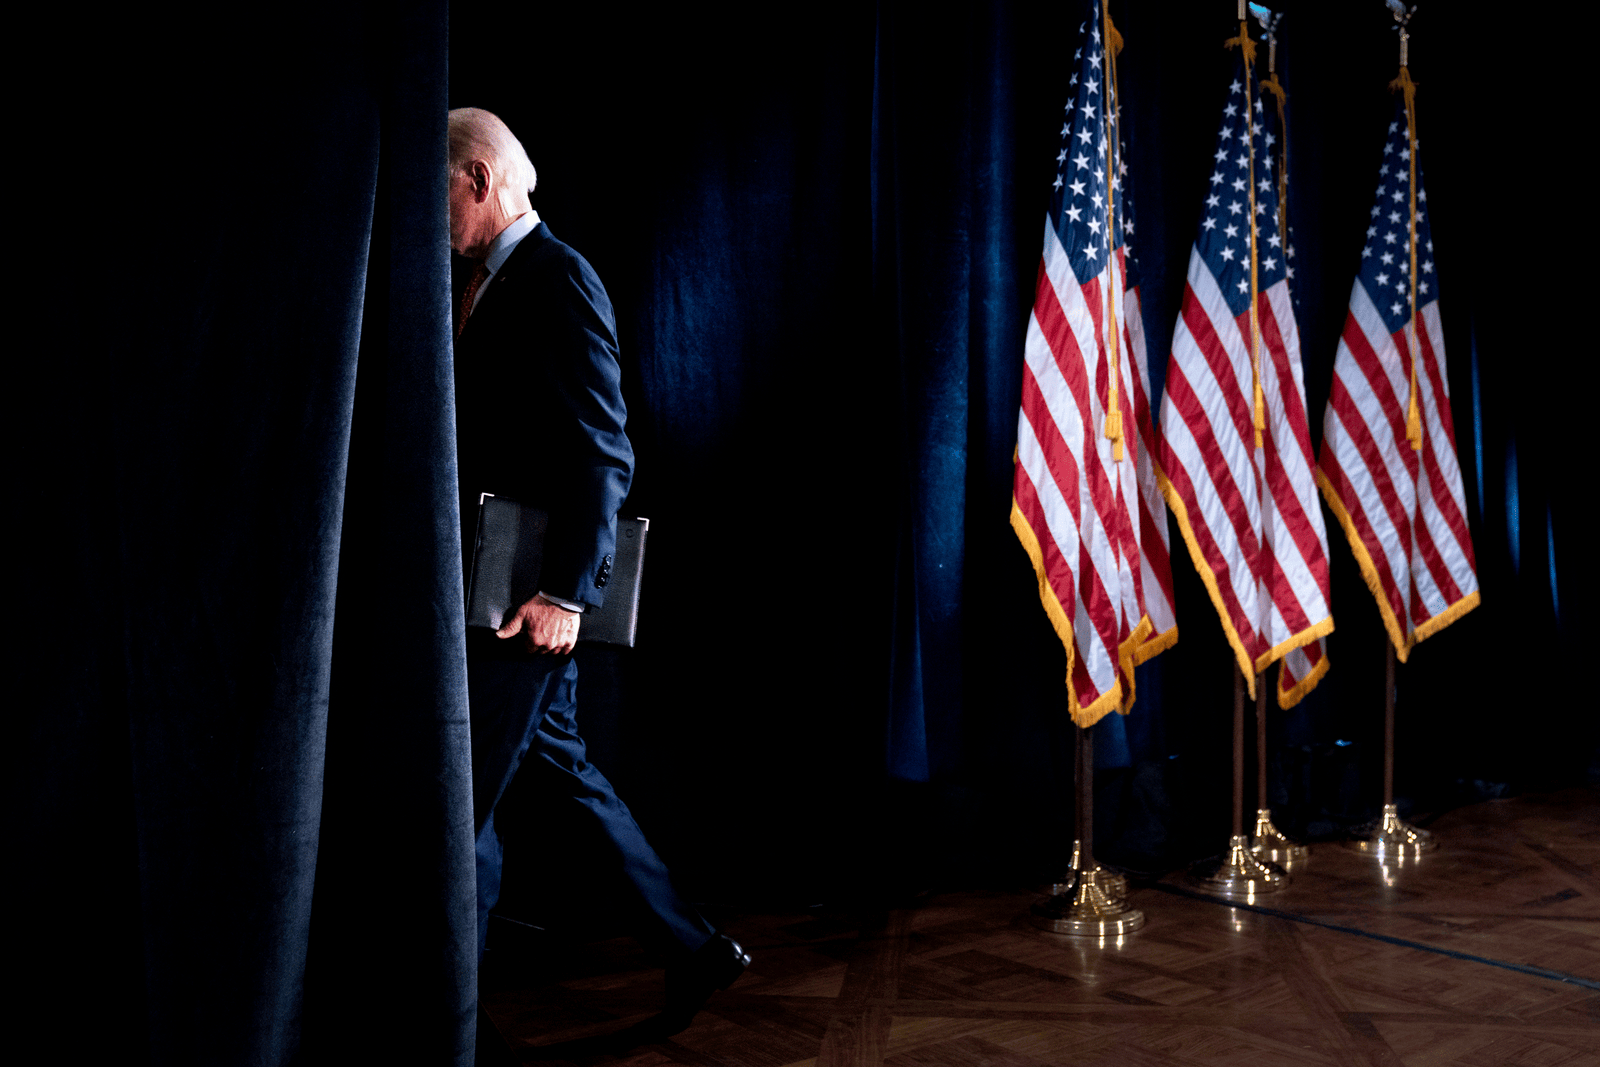 President Joe Biden walking behind a curtain on stage near three United States flags